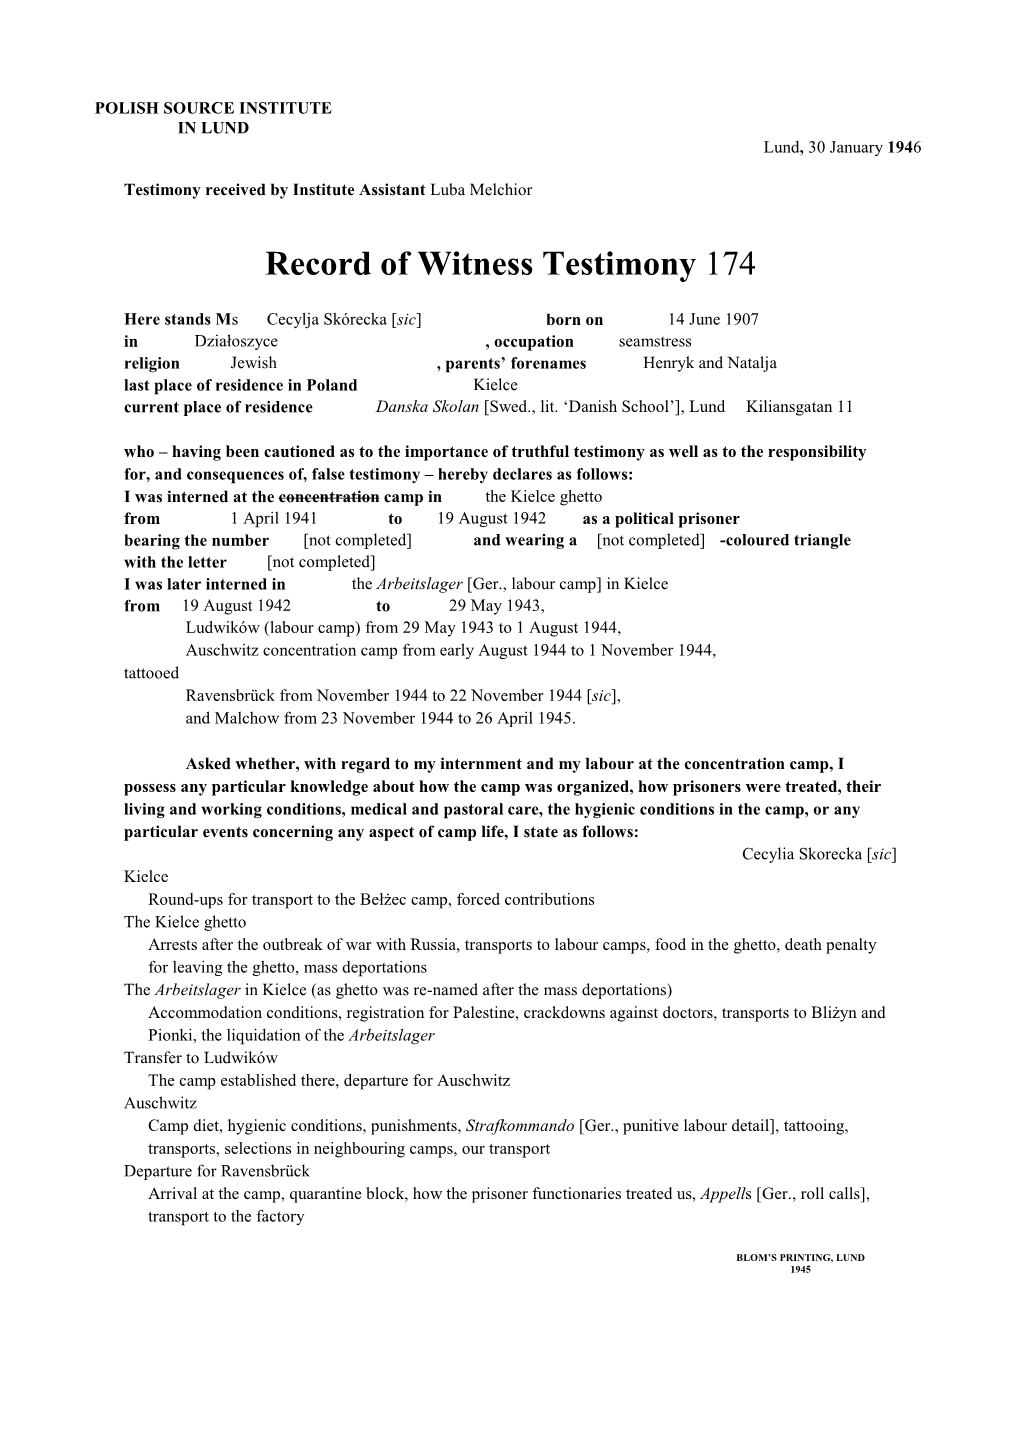 Record of Witness Testimony 174